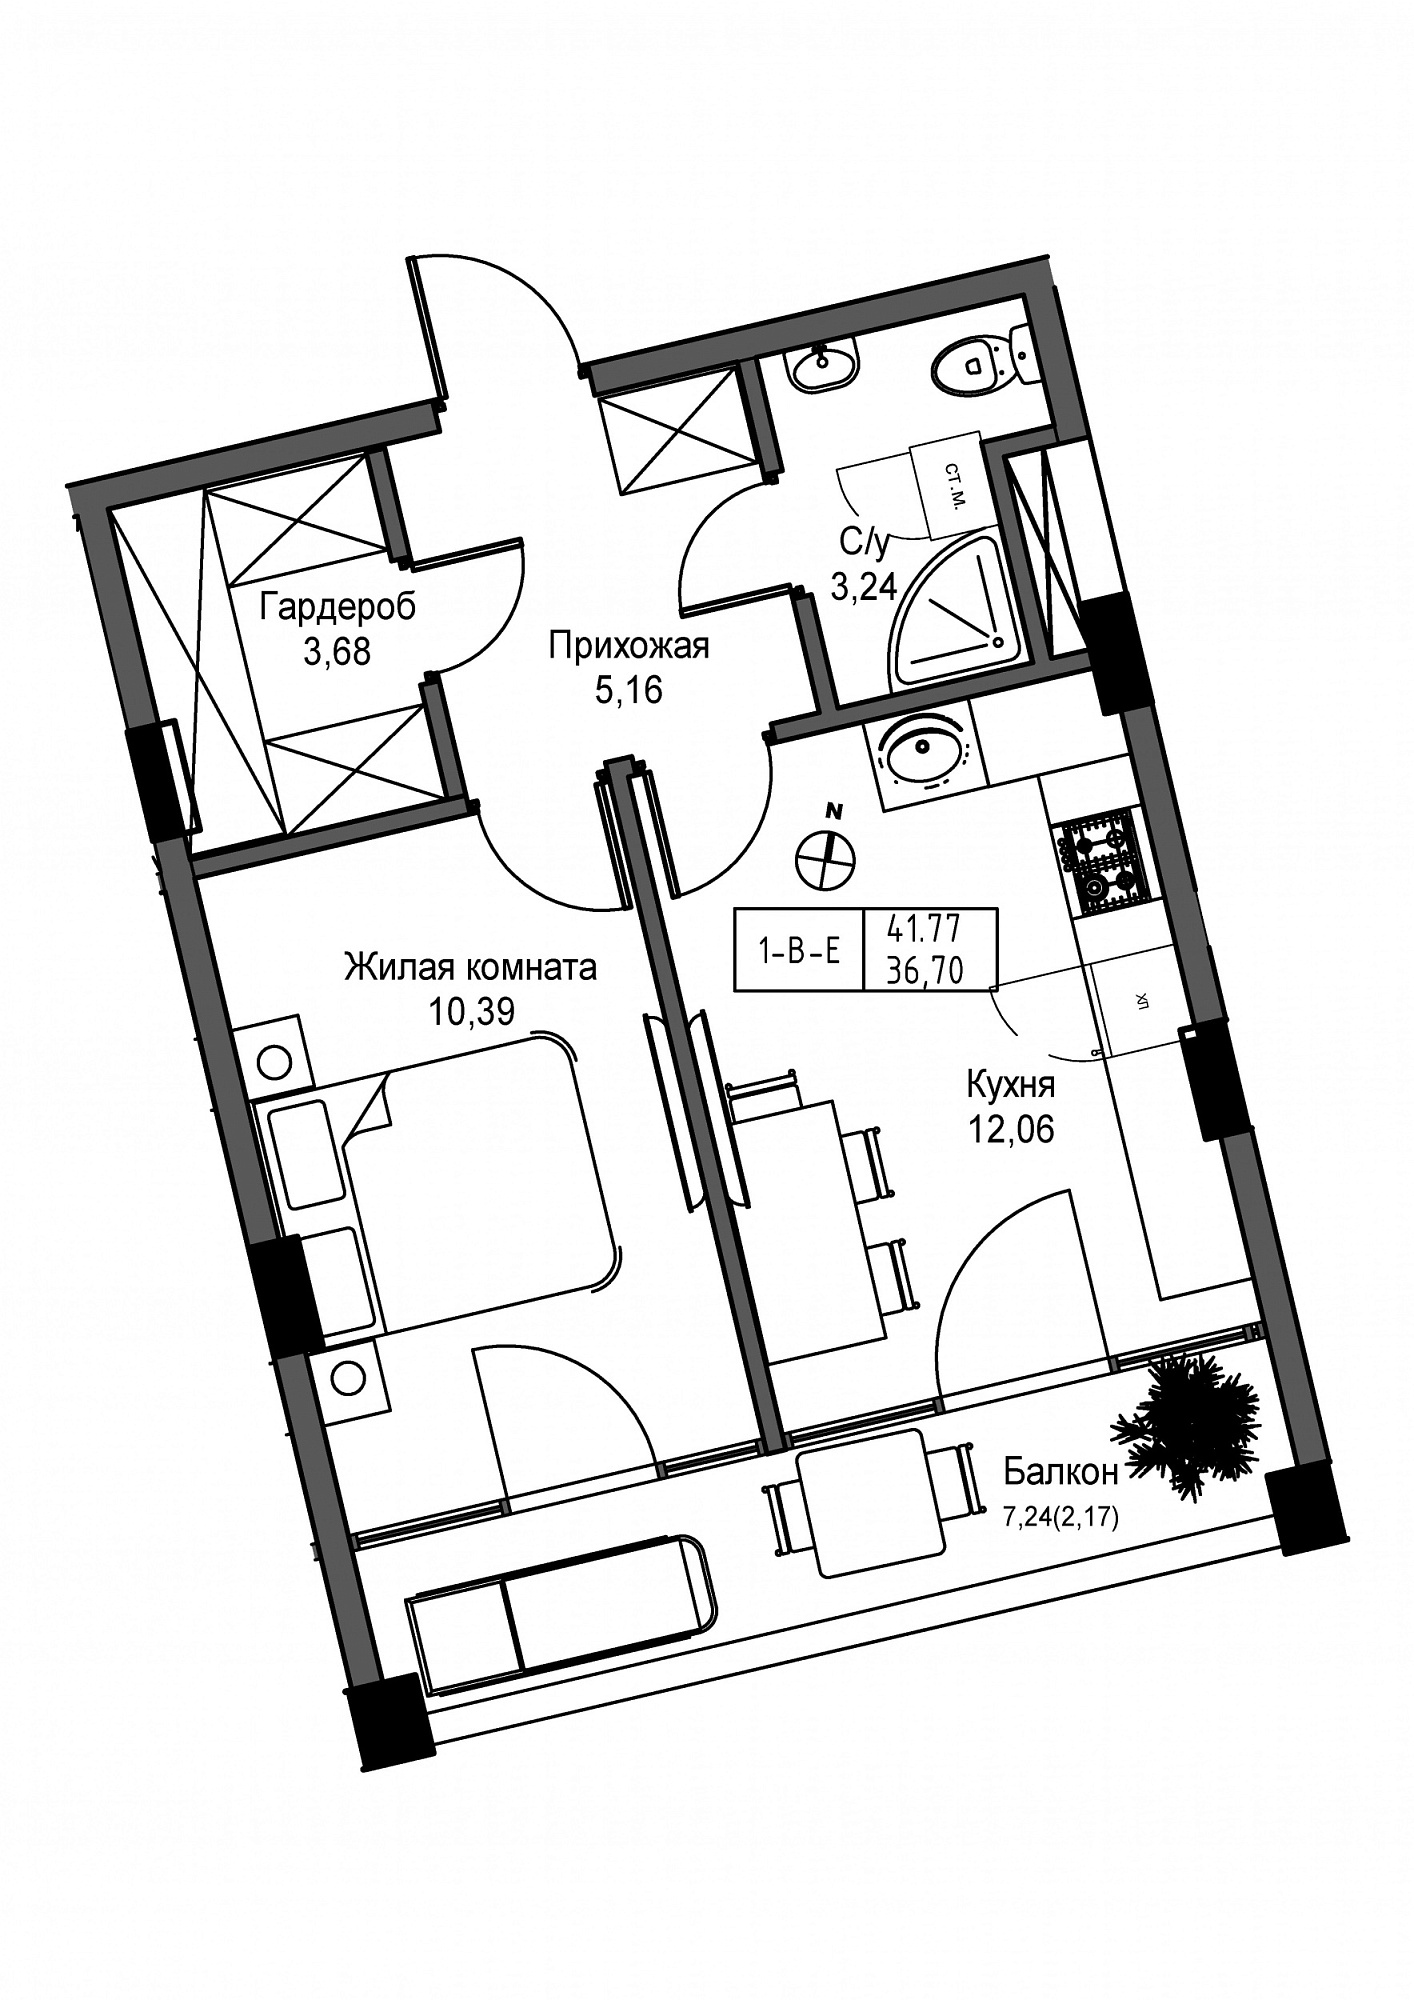 Планування 1-к квартира площею 36.7м2, UM-004-05/0012.